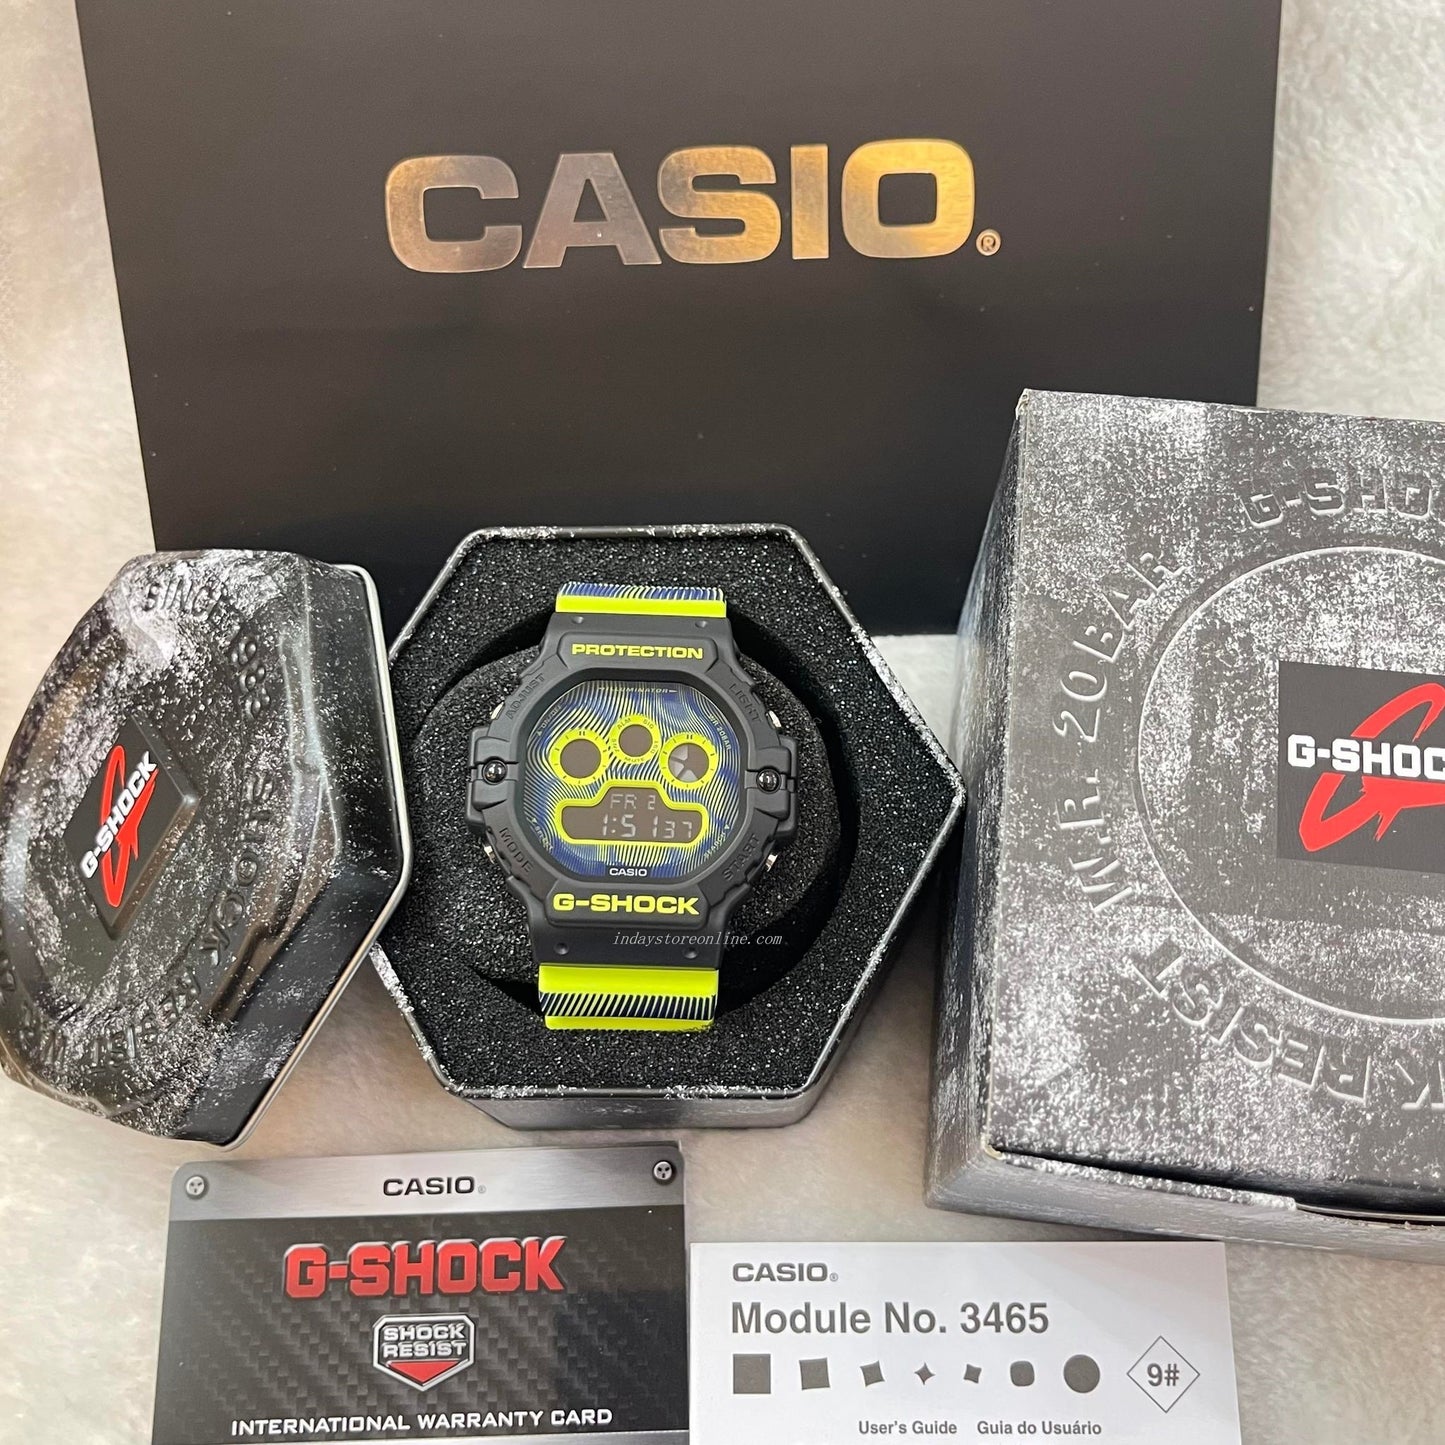 Casio G-Shock Men's Watch DW-5900TD-9 Digital 5900 Series Time Distortion Vibrant Fluorescent Colors